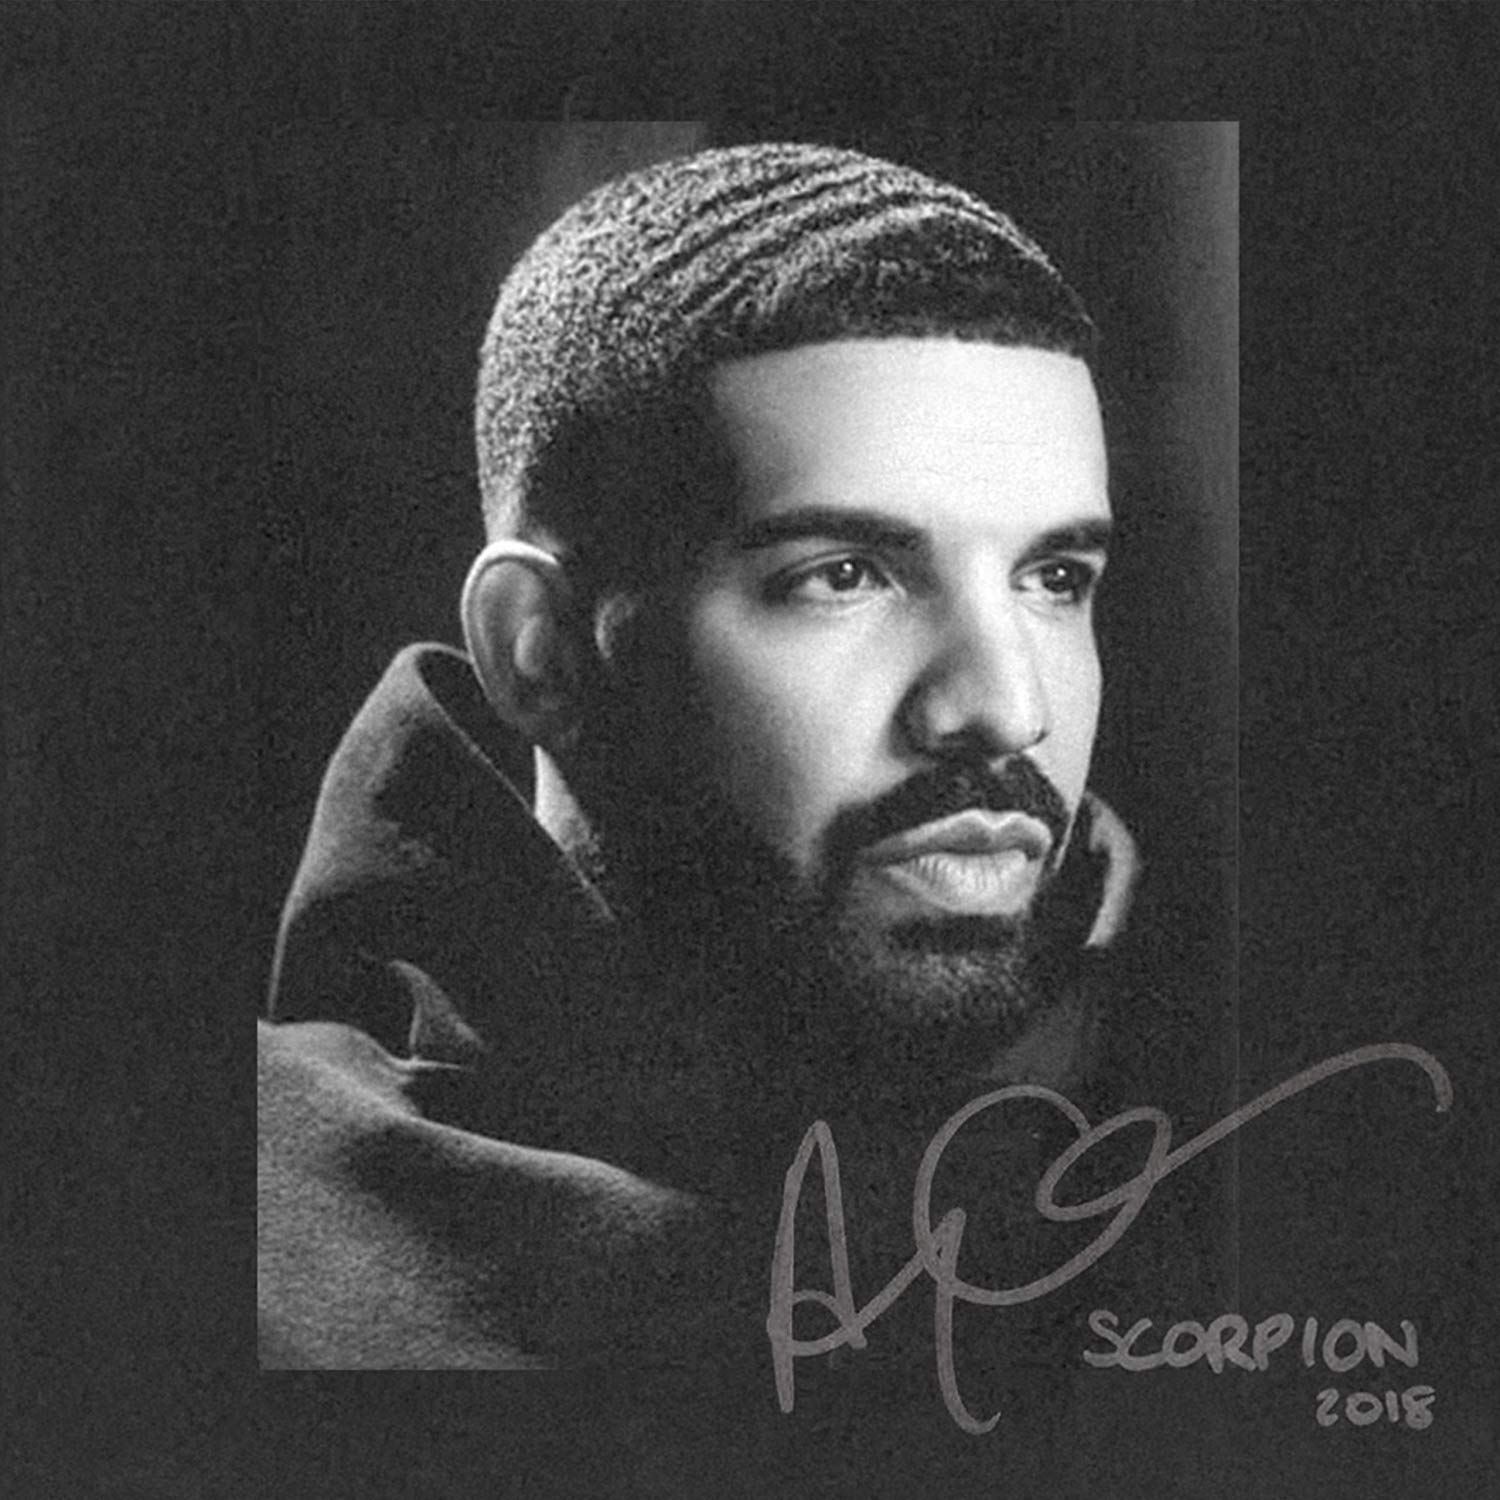 CD pas cher - Scorpion - Drake